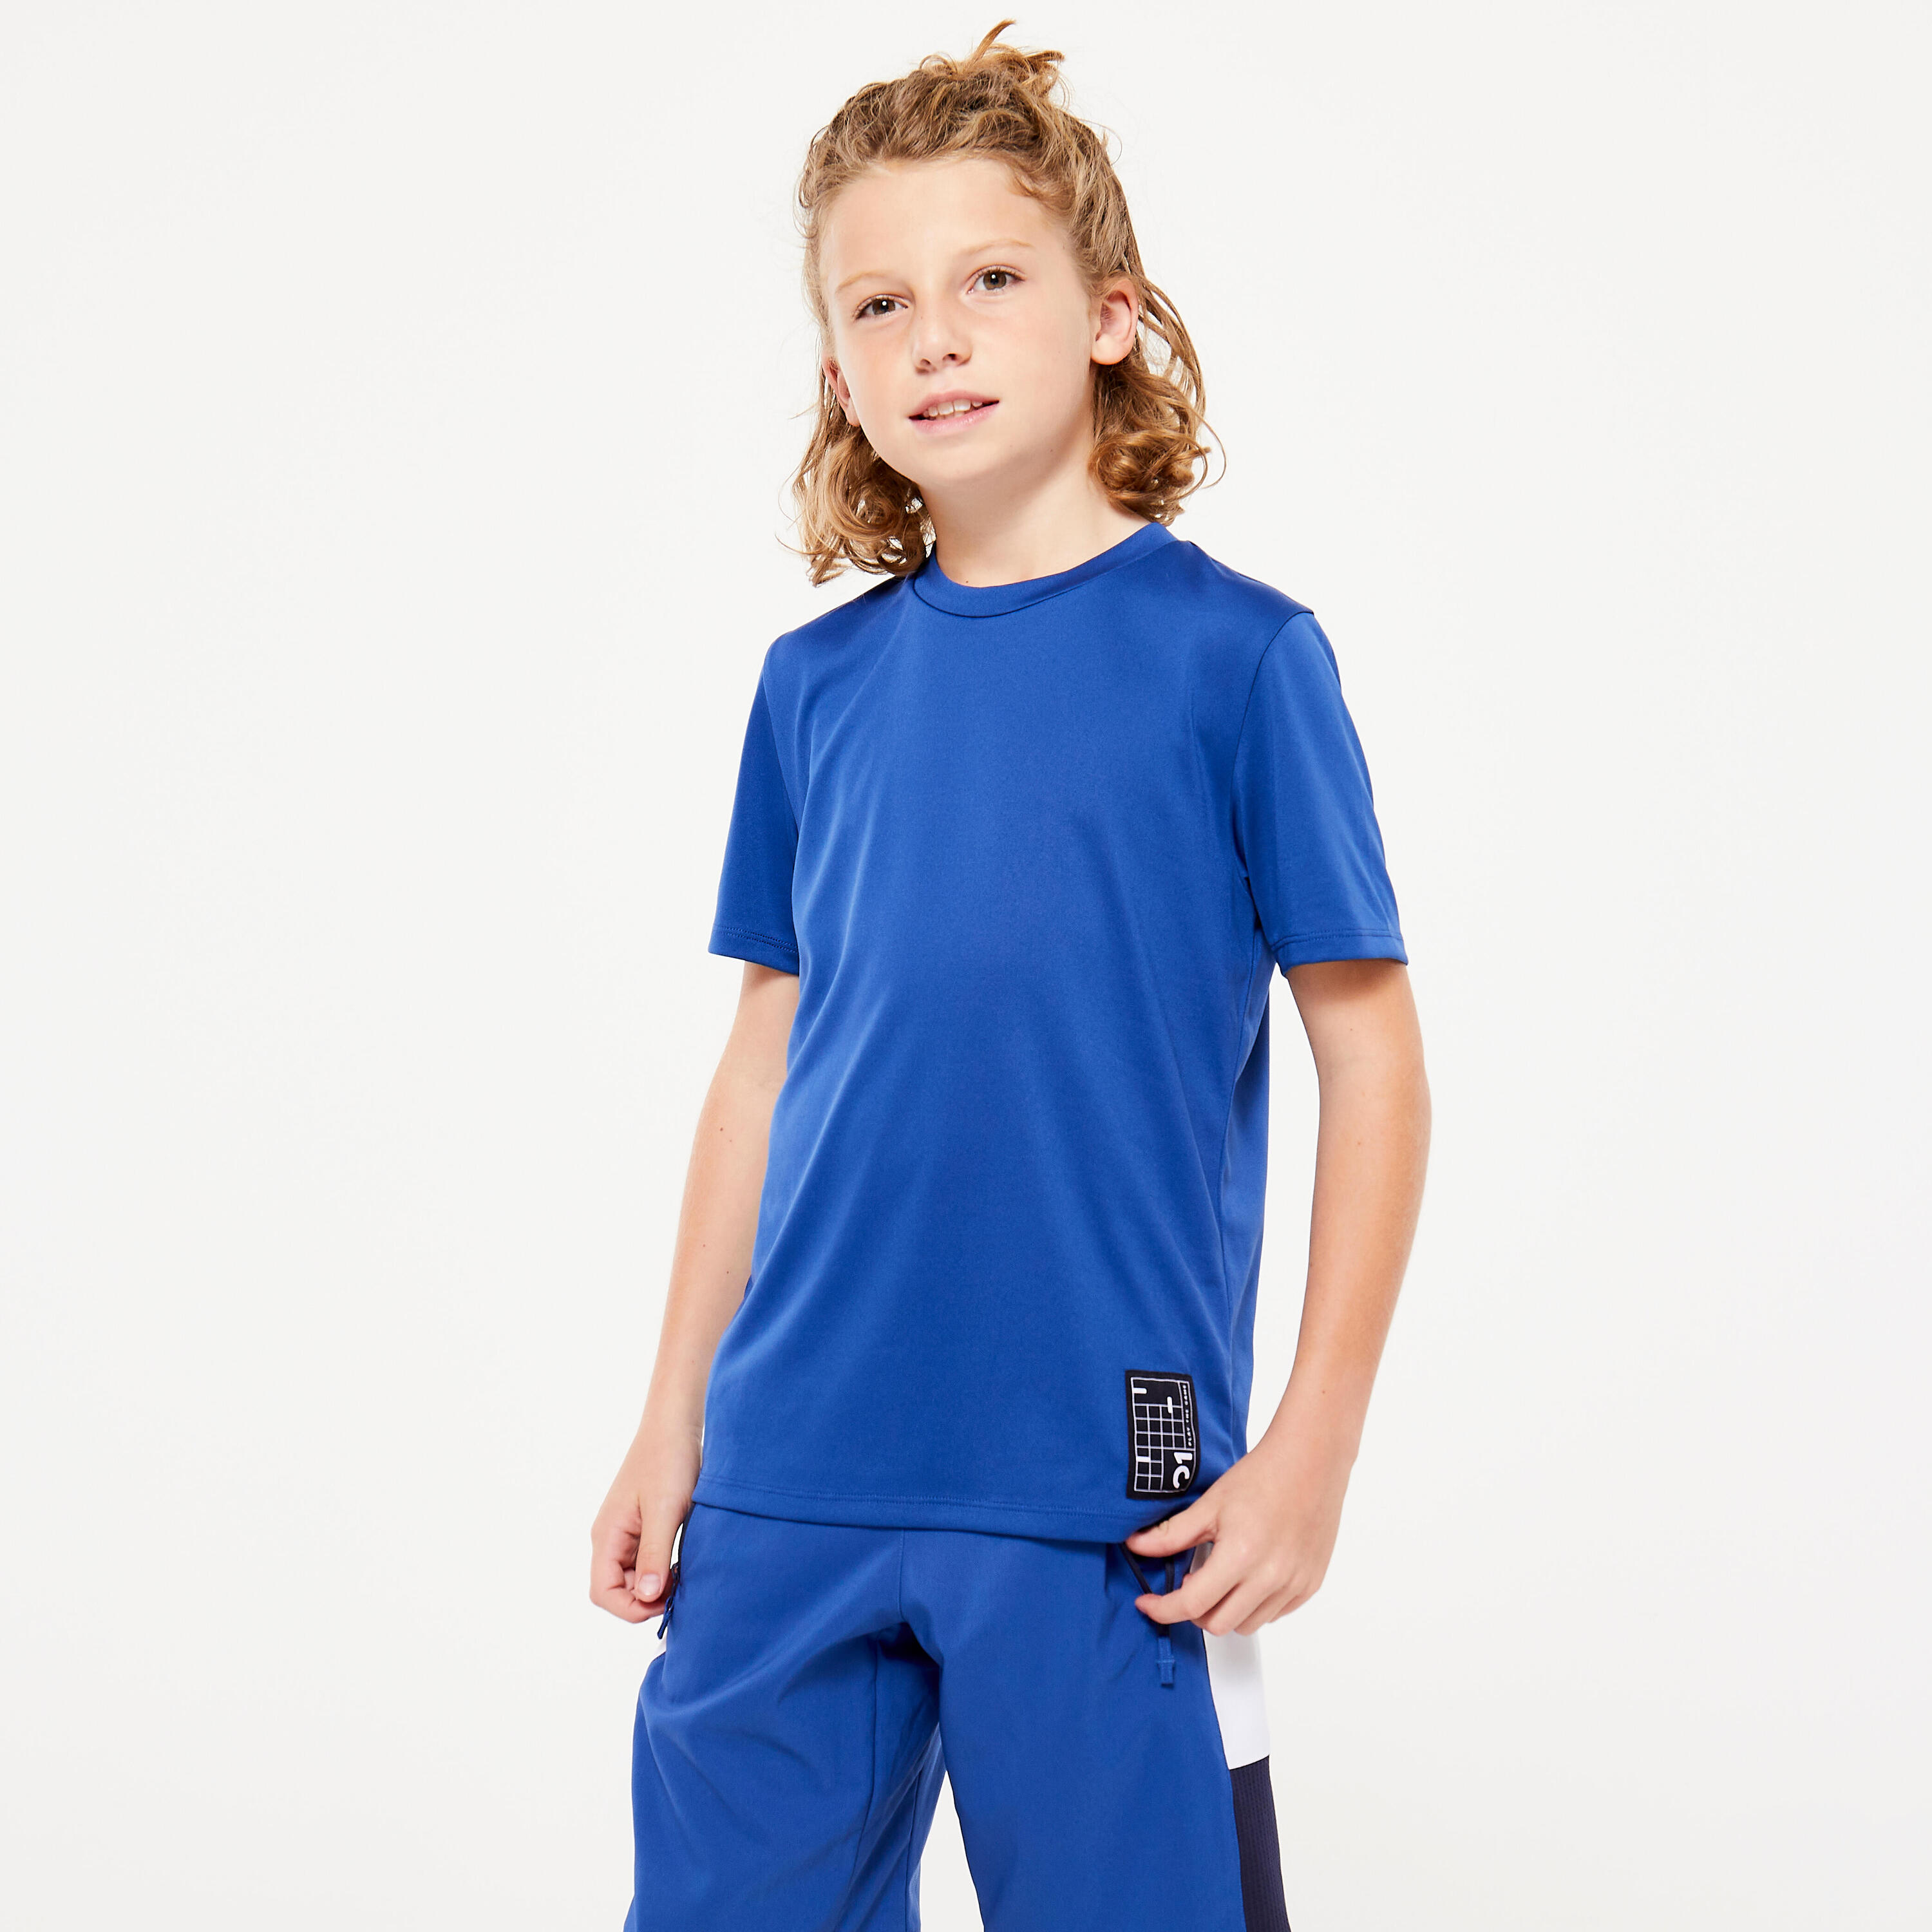 Kids' Breathable T-Shirt - Blue 1/4